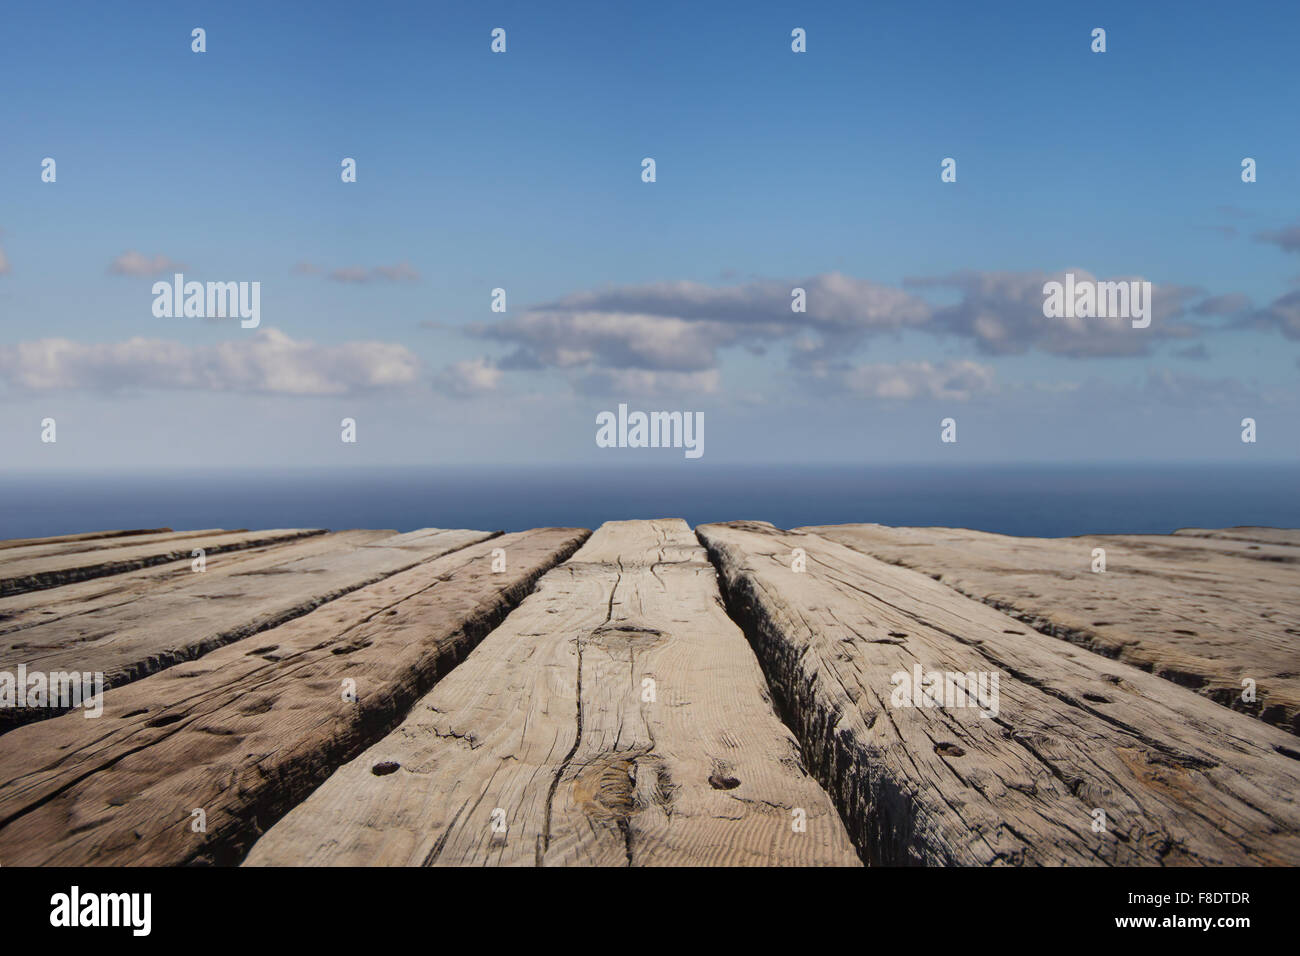 vacation background - wooden board floor with ocean horizon in background Stock Photo